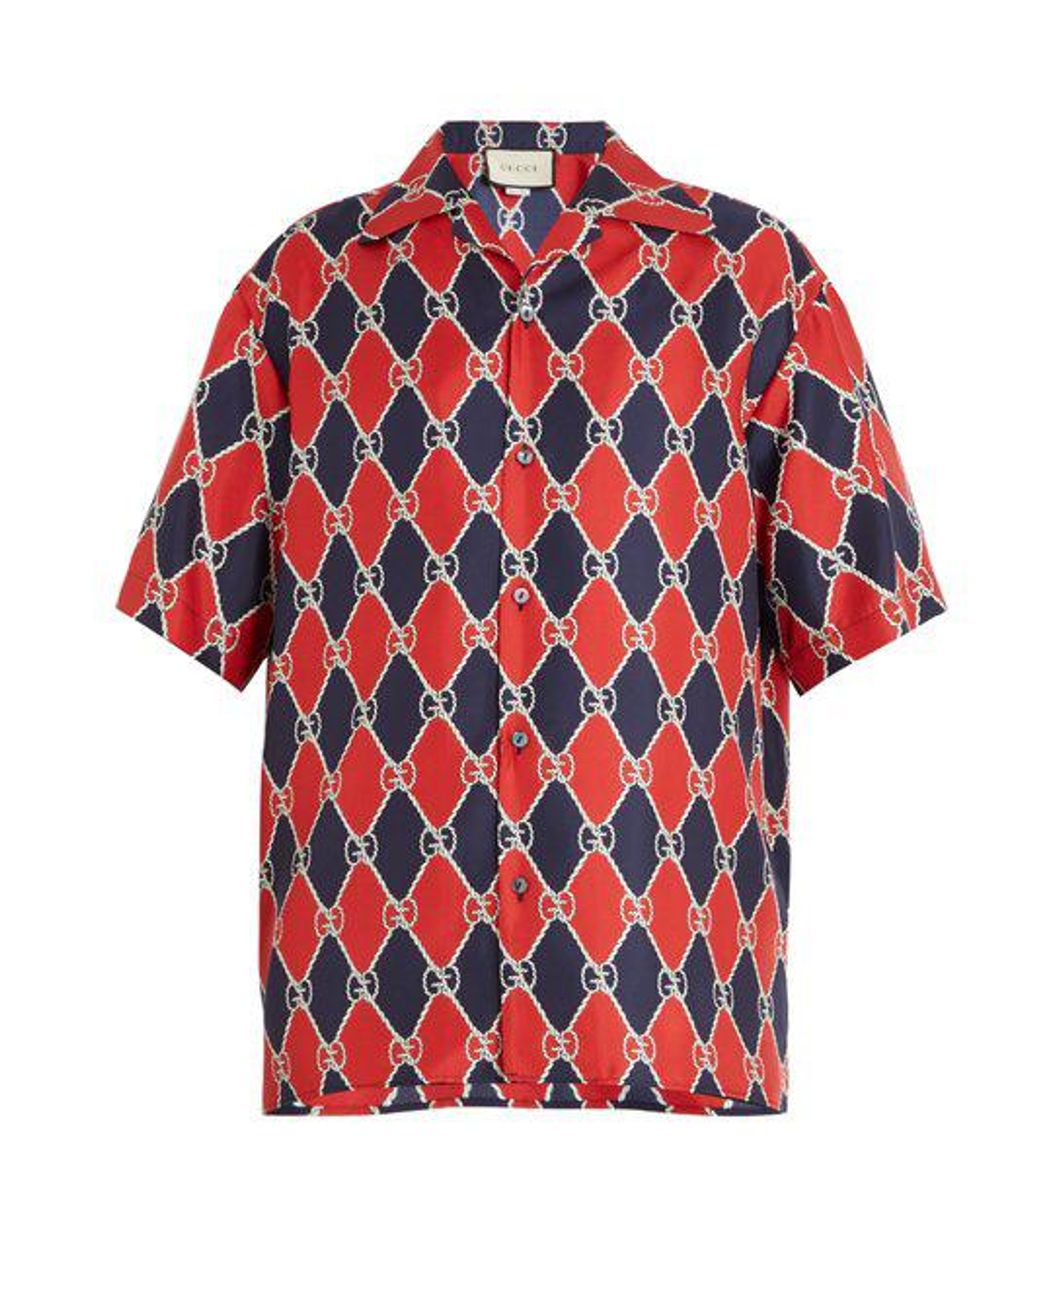 Gucci Red & Navy Bowling Shirt